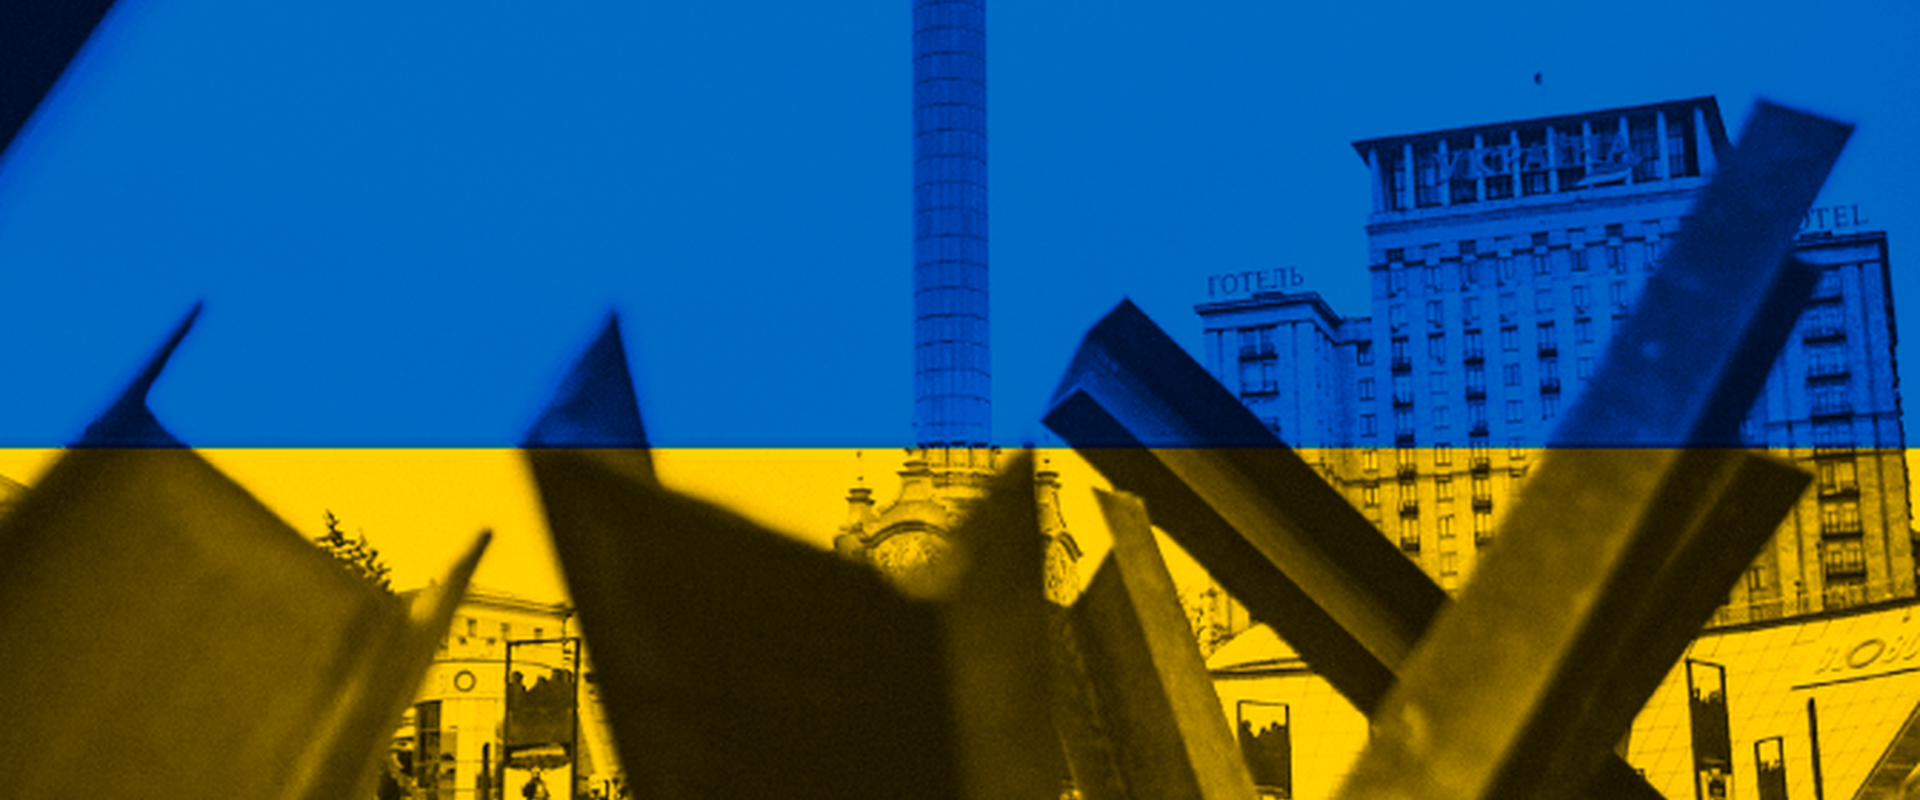 Kyiv and Ukraine Flag